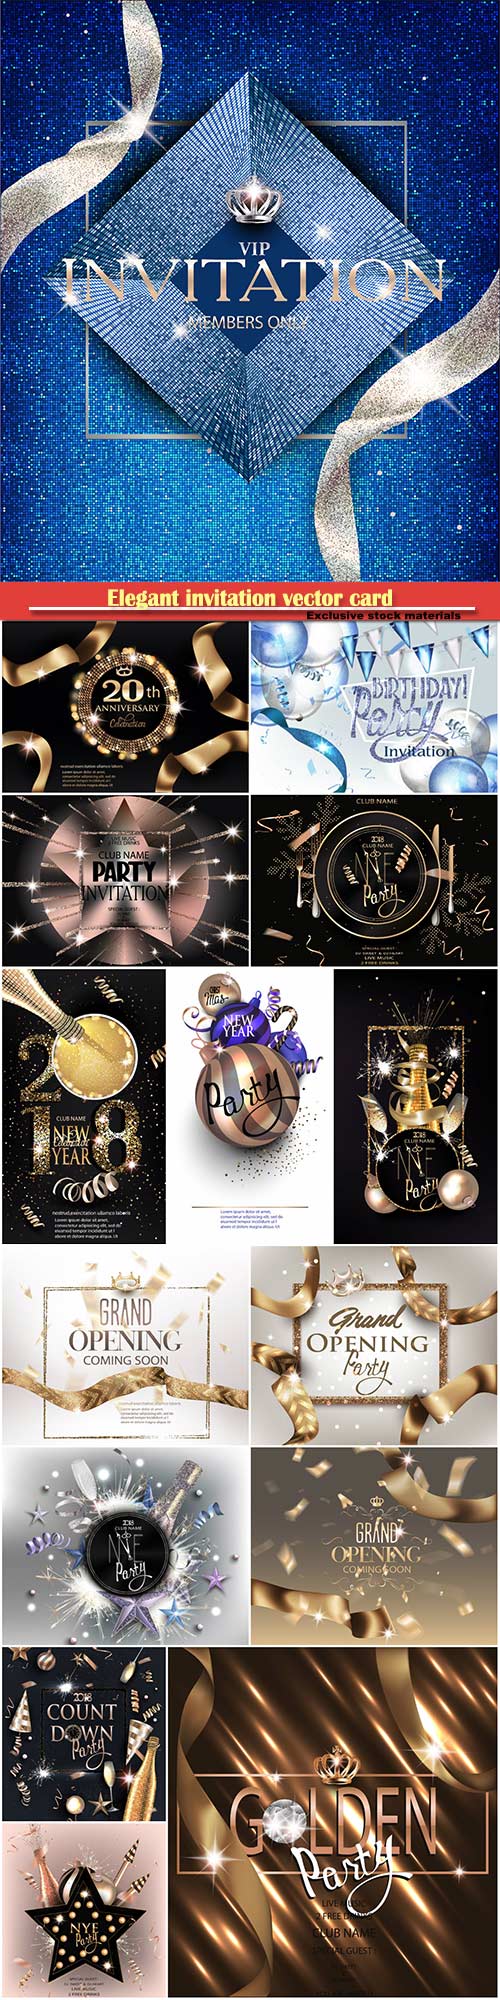 Elegant invitation vector card with sparkling ribbons and vintage design el ...